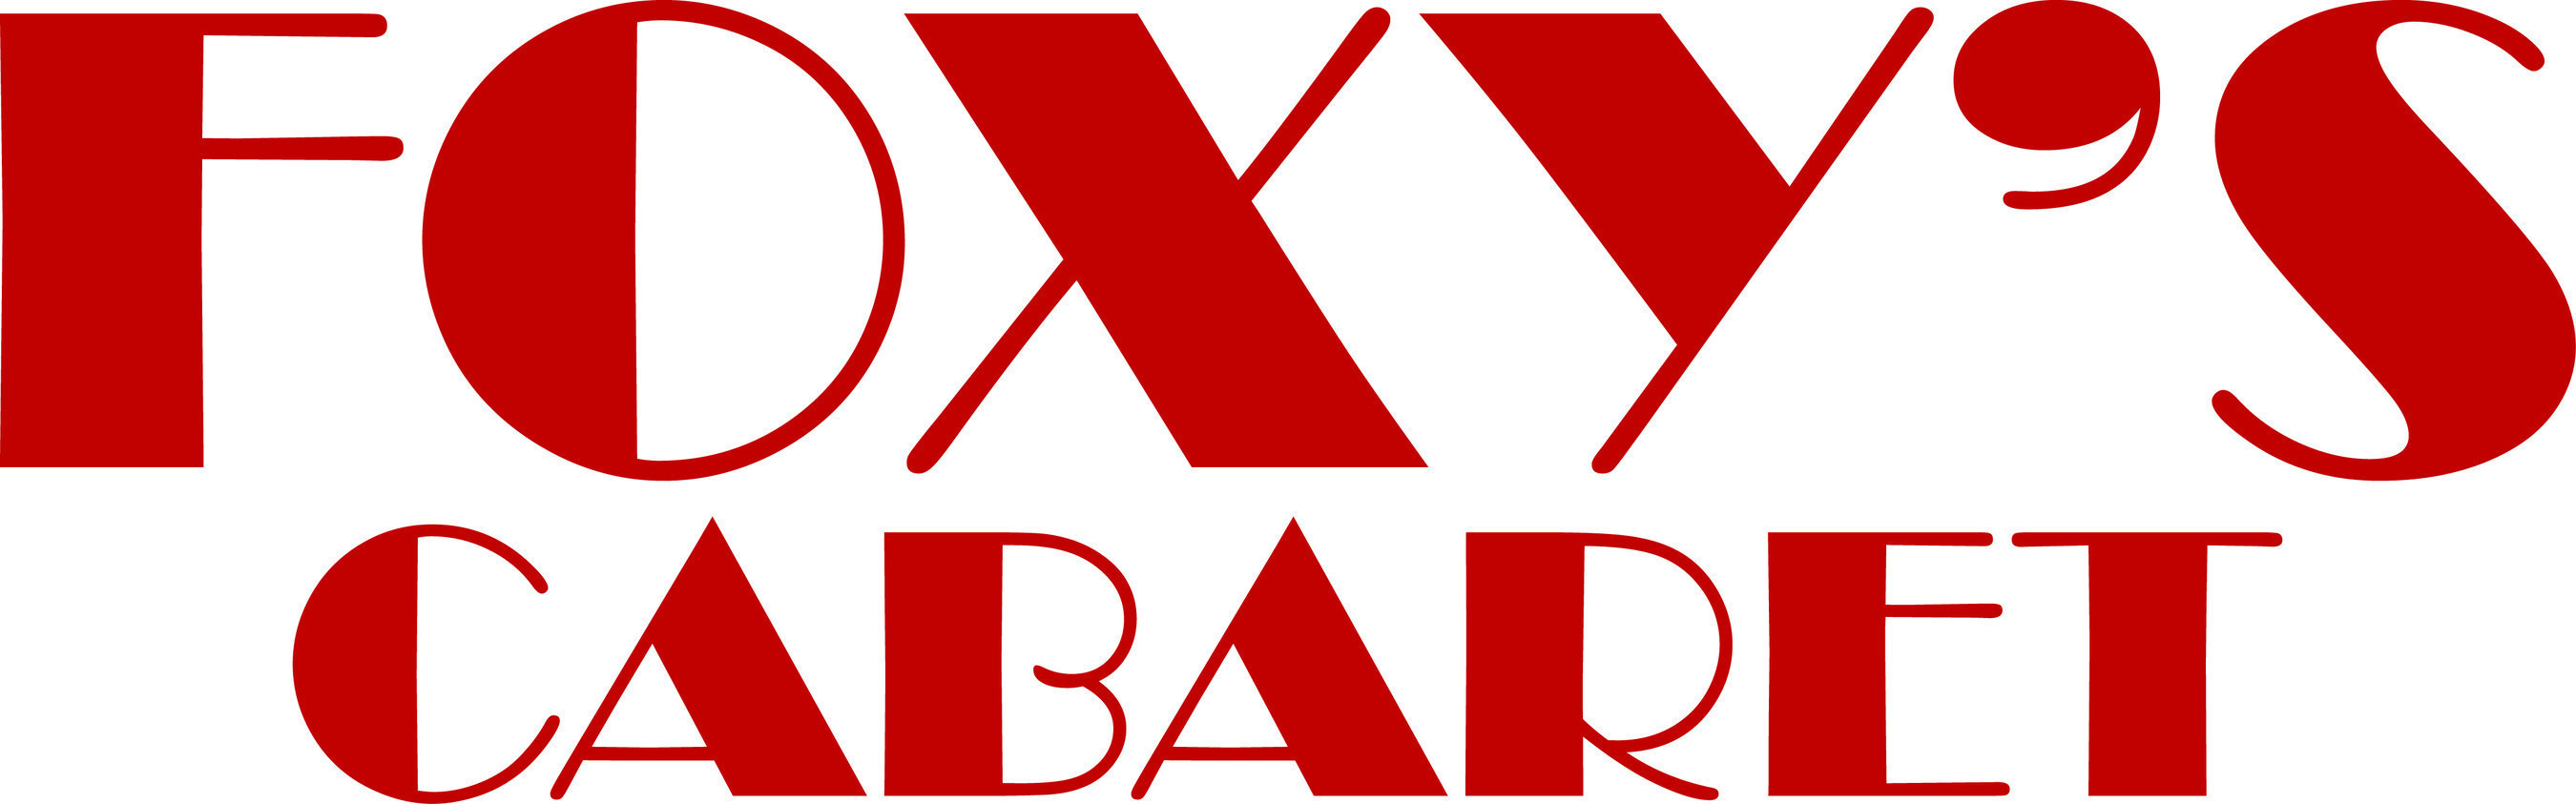 Foxy's Cabaret logo